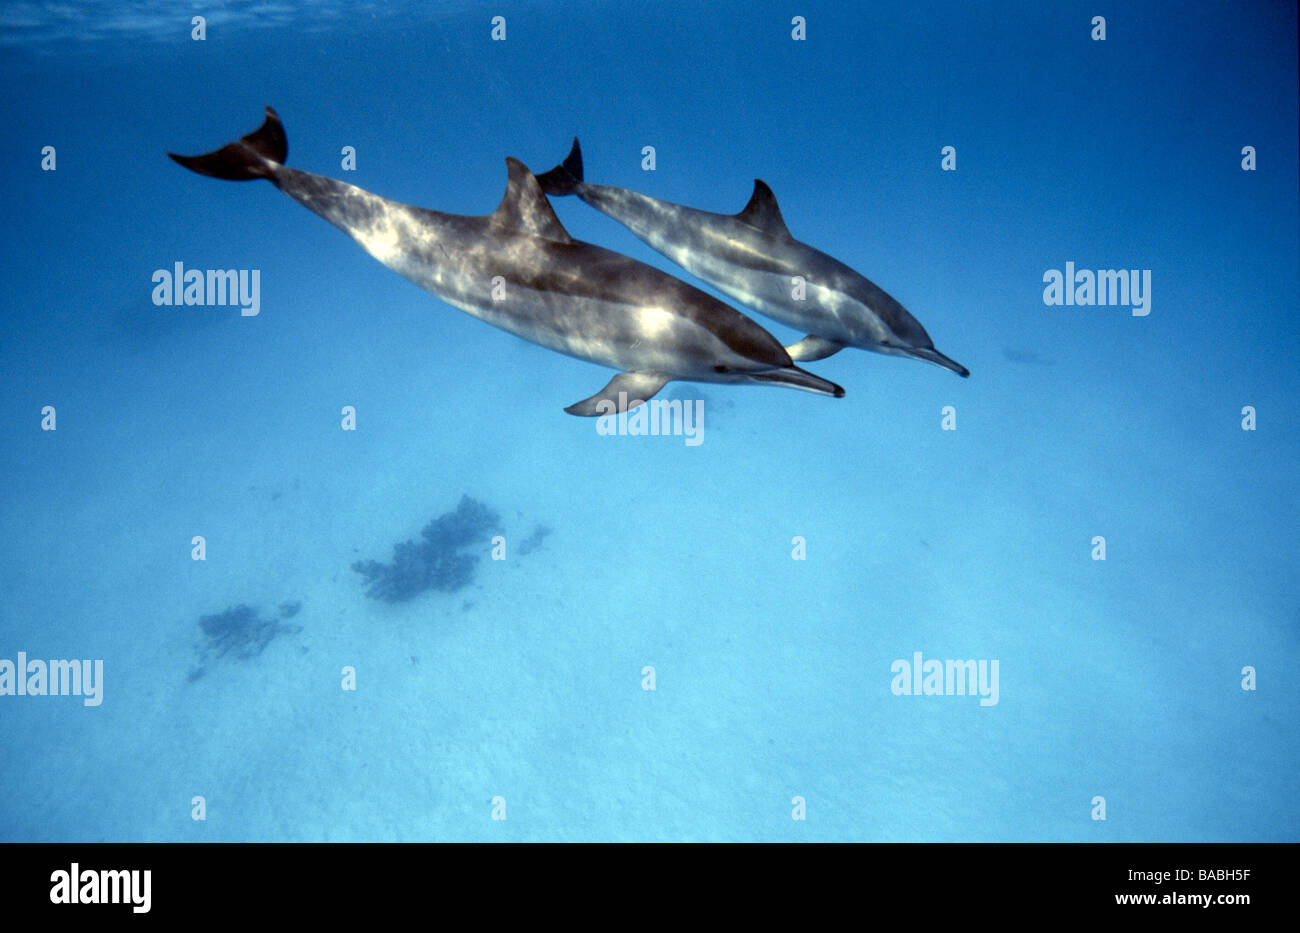 Mar Rosso i delfini a Marsa Alam Samadai Bay, subacquea, acqua limpida acqua blu, scuba diving,, oceano mare, snorkeling, mammiferi Foto Stock